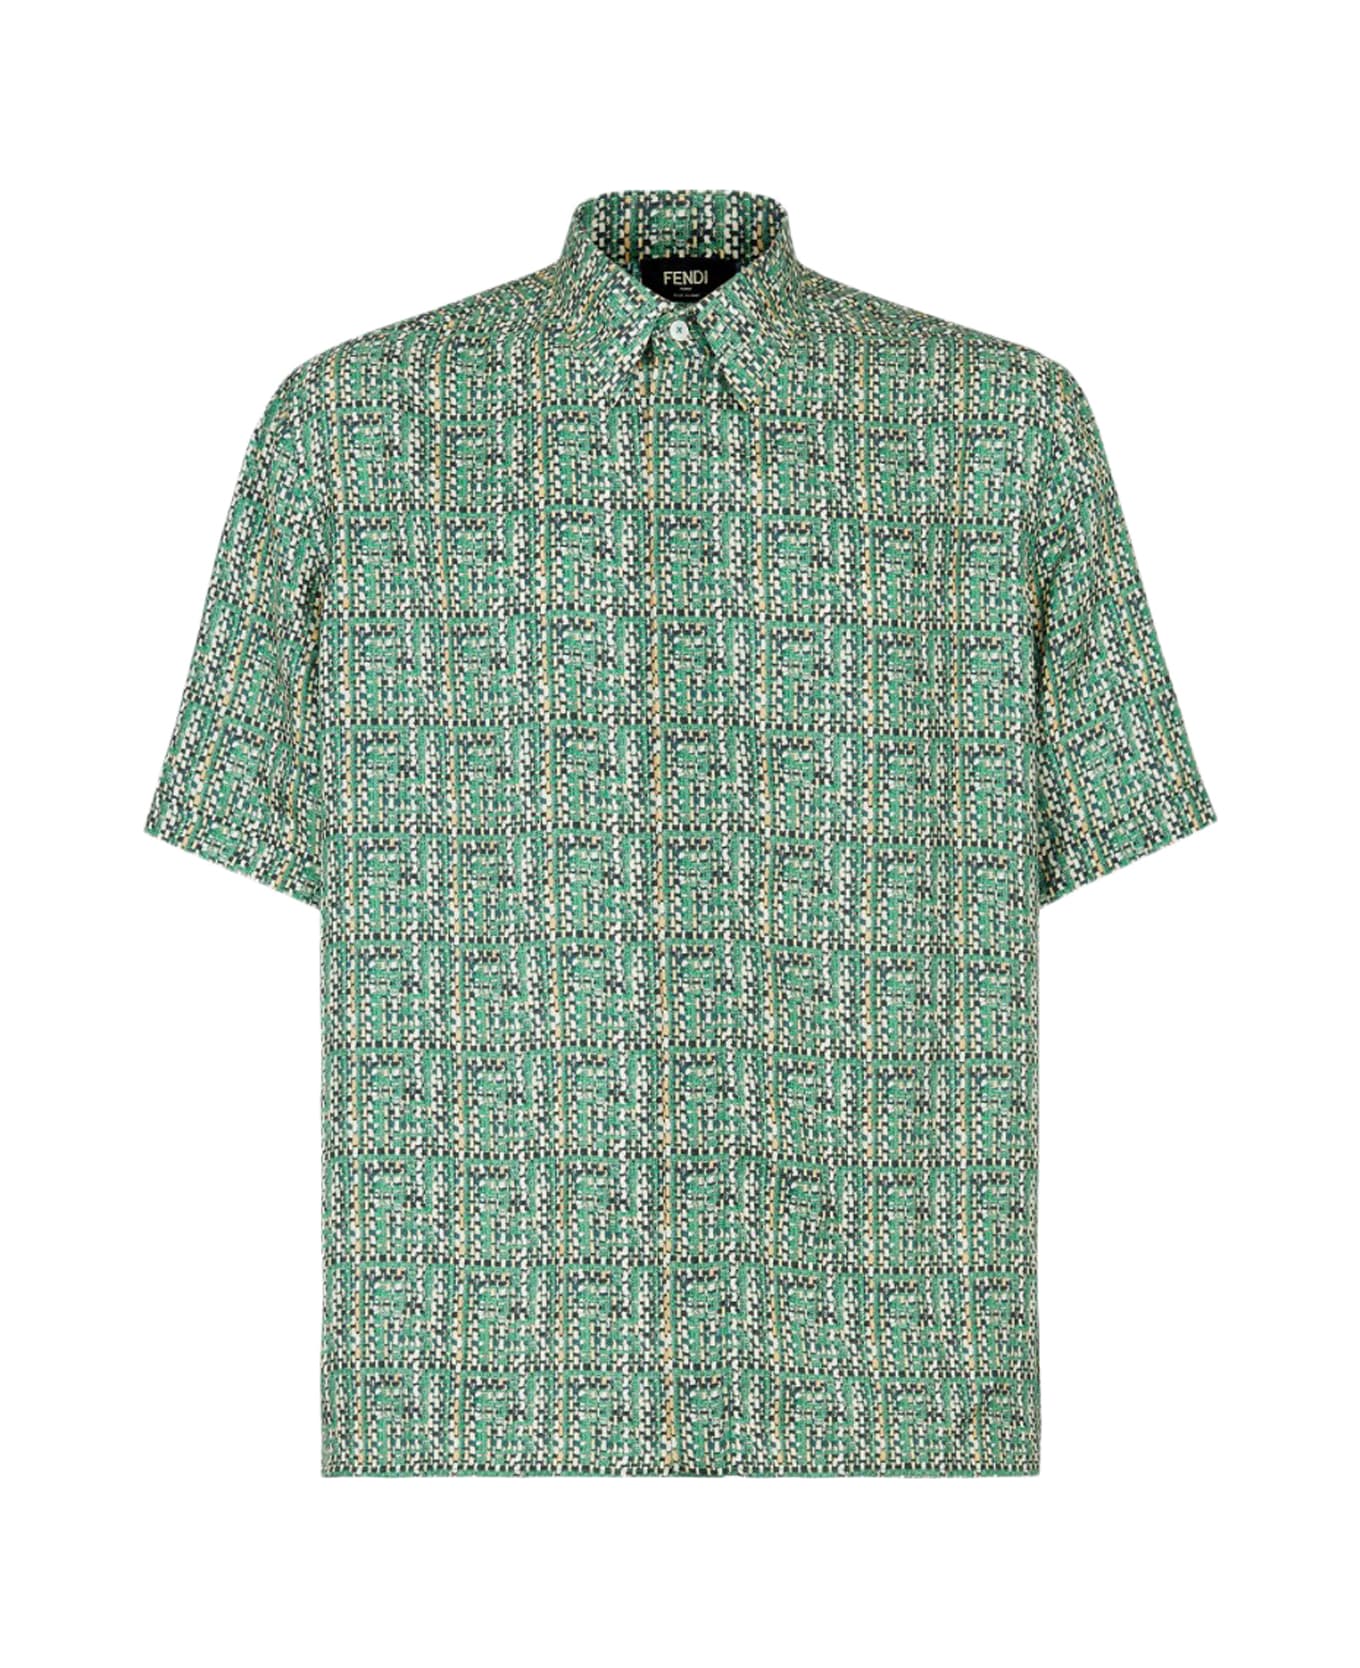 Fendi Printed Silk Shirt - Green シャツ